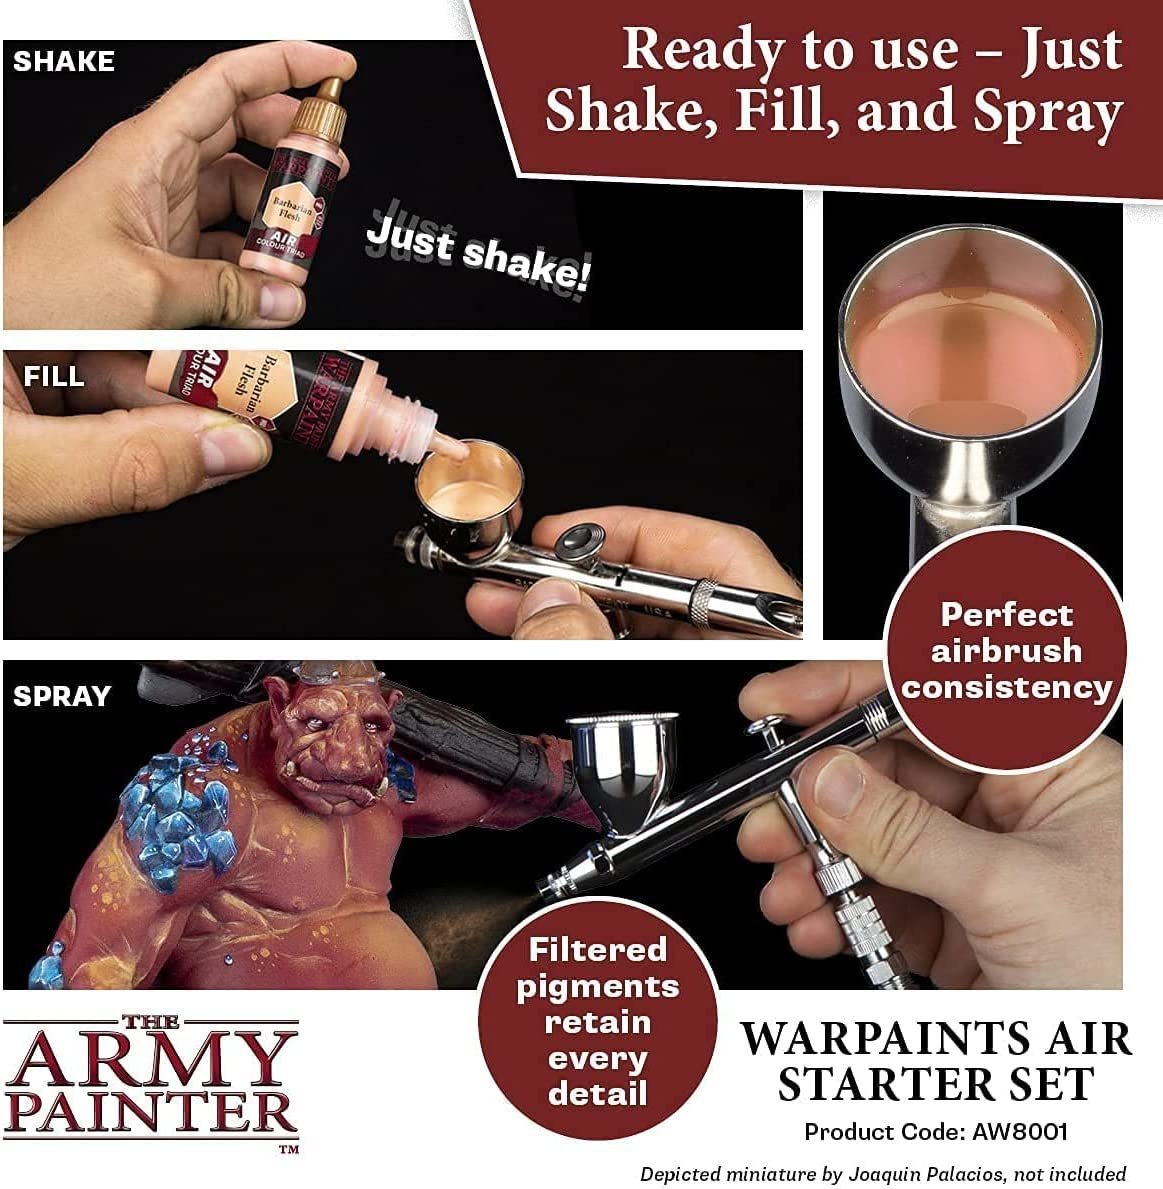 The Army Painter - Warpaints Air Starter Set